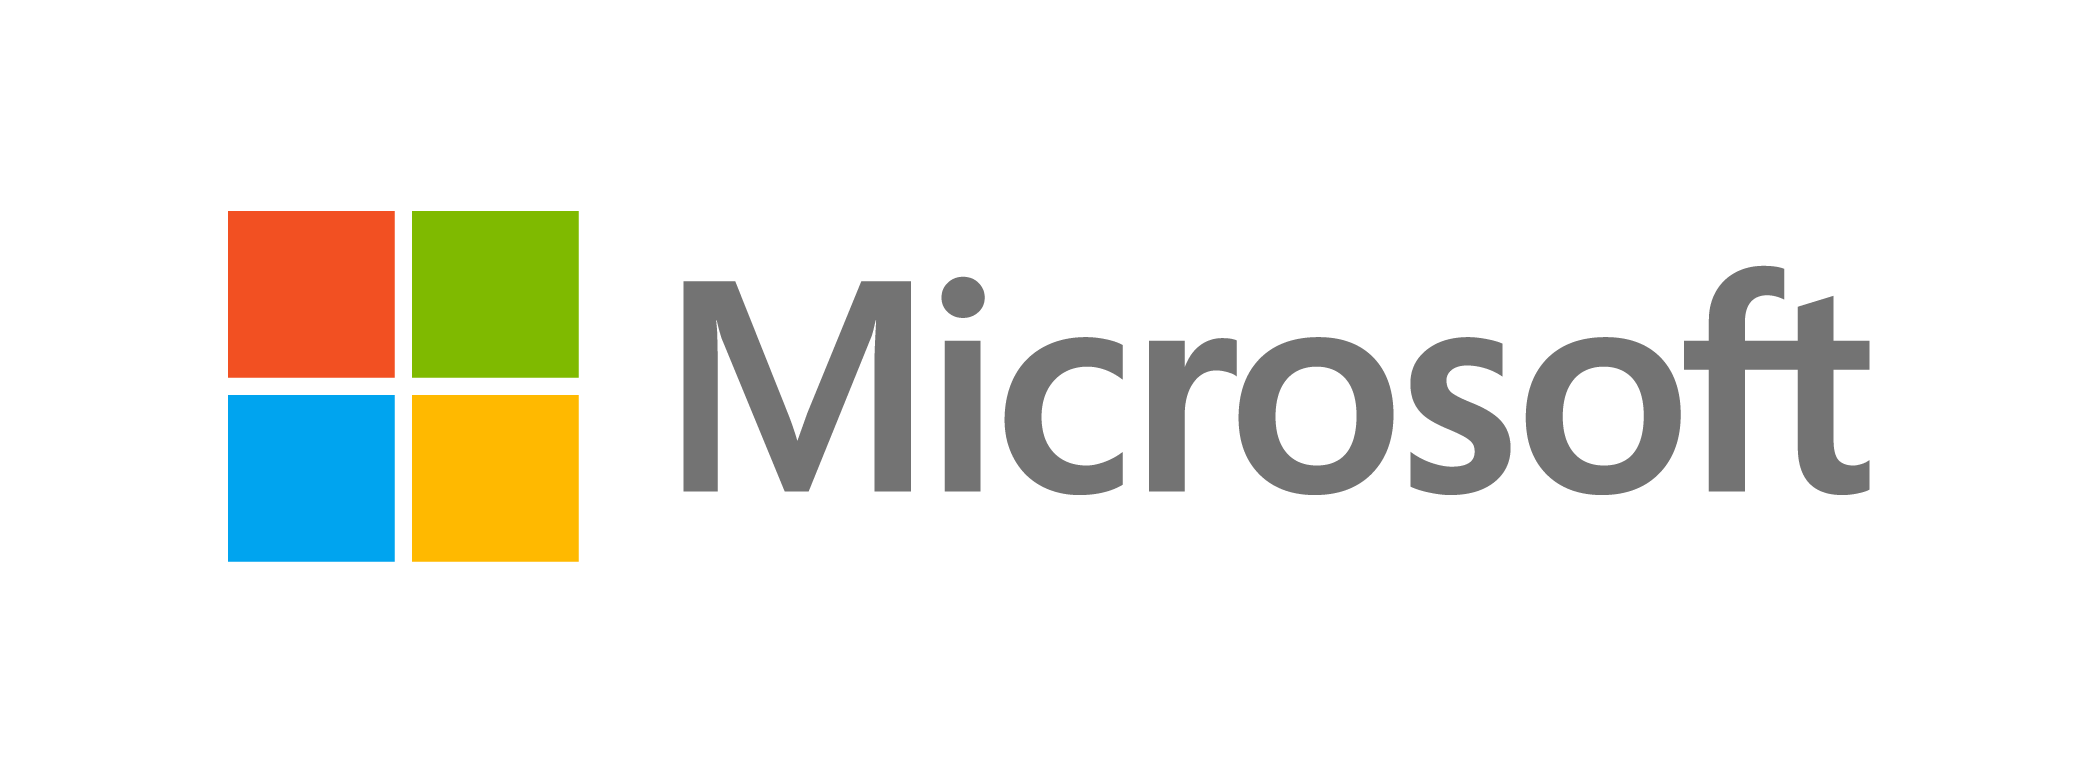 Brandy Logo Microsoft Com Background PNG